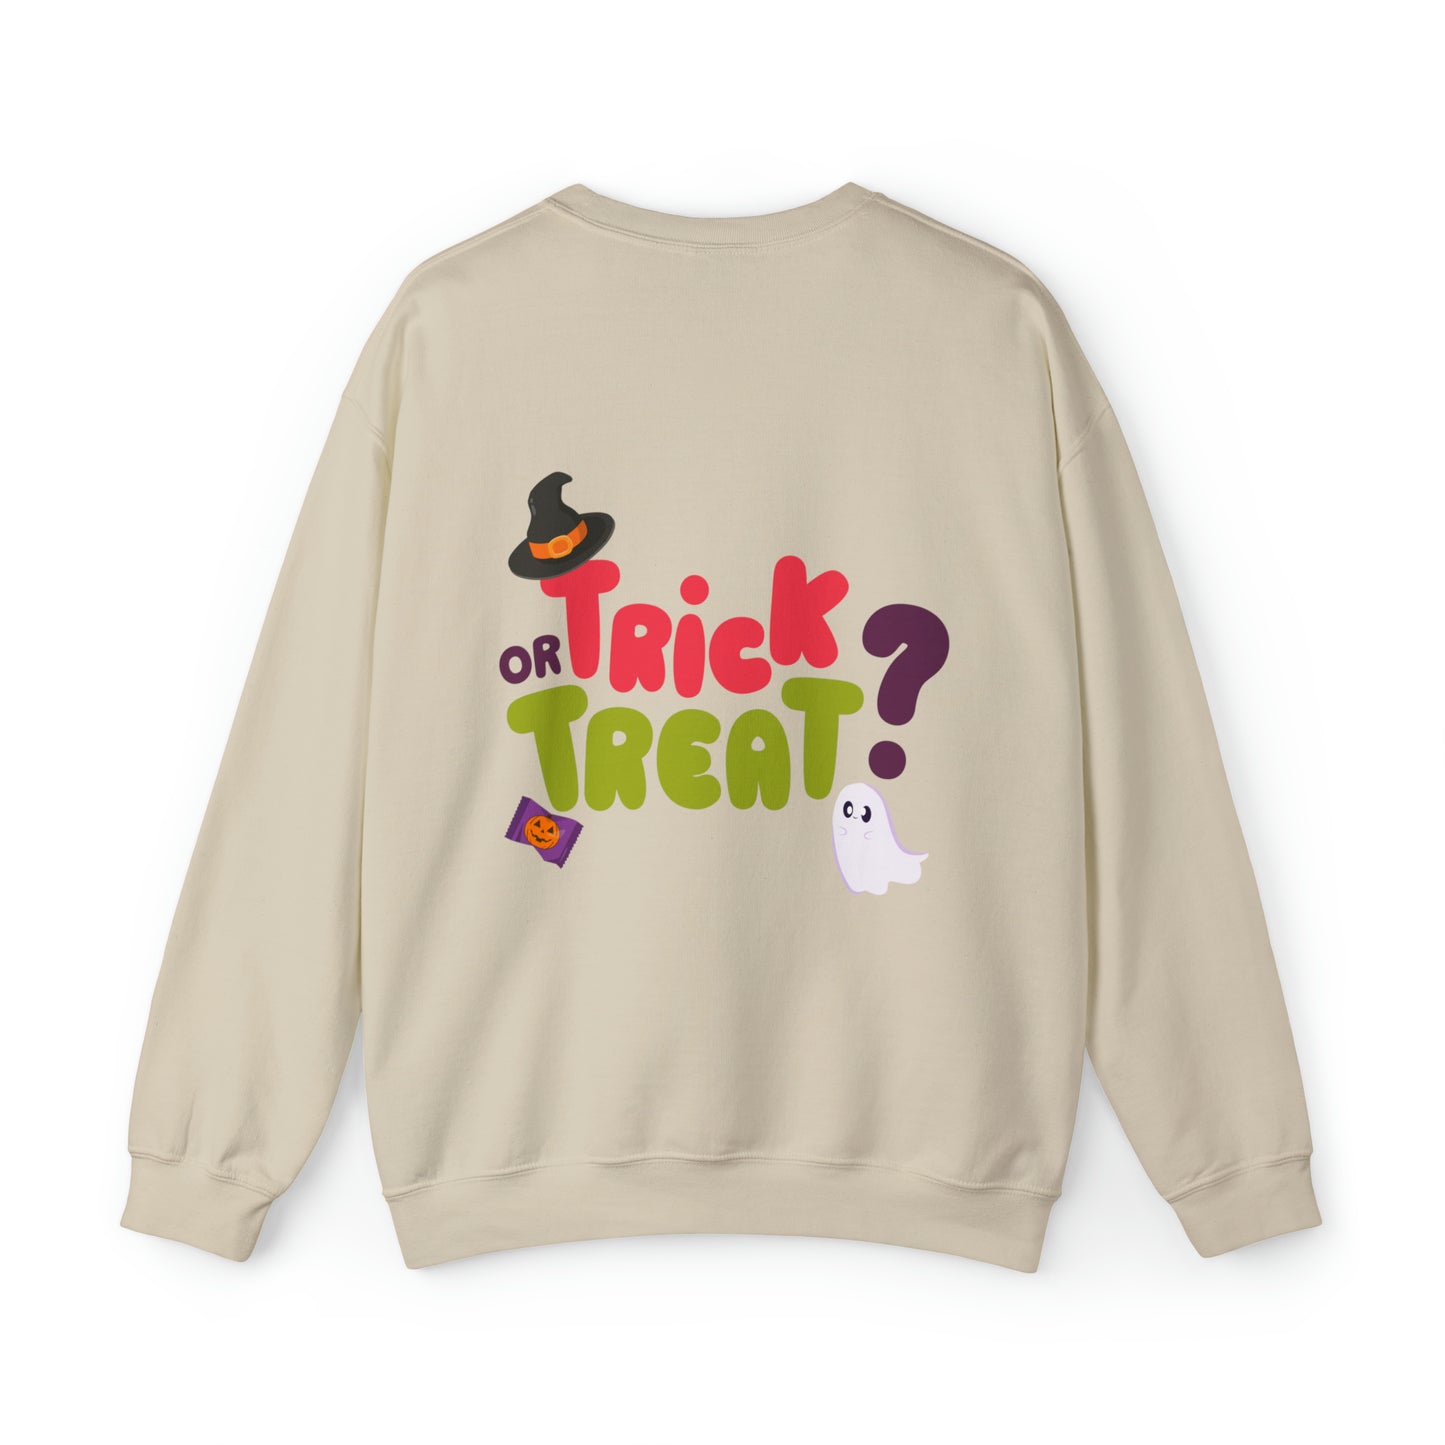 Trick Or Treat Sweatshirt